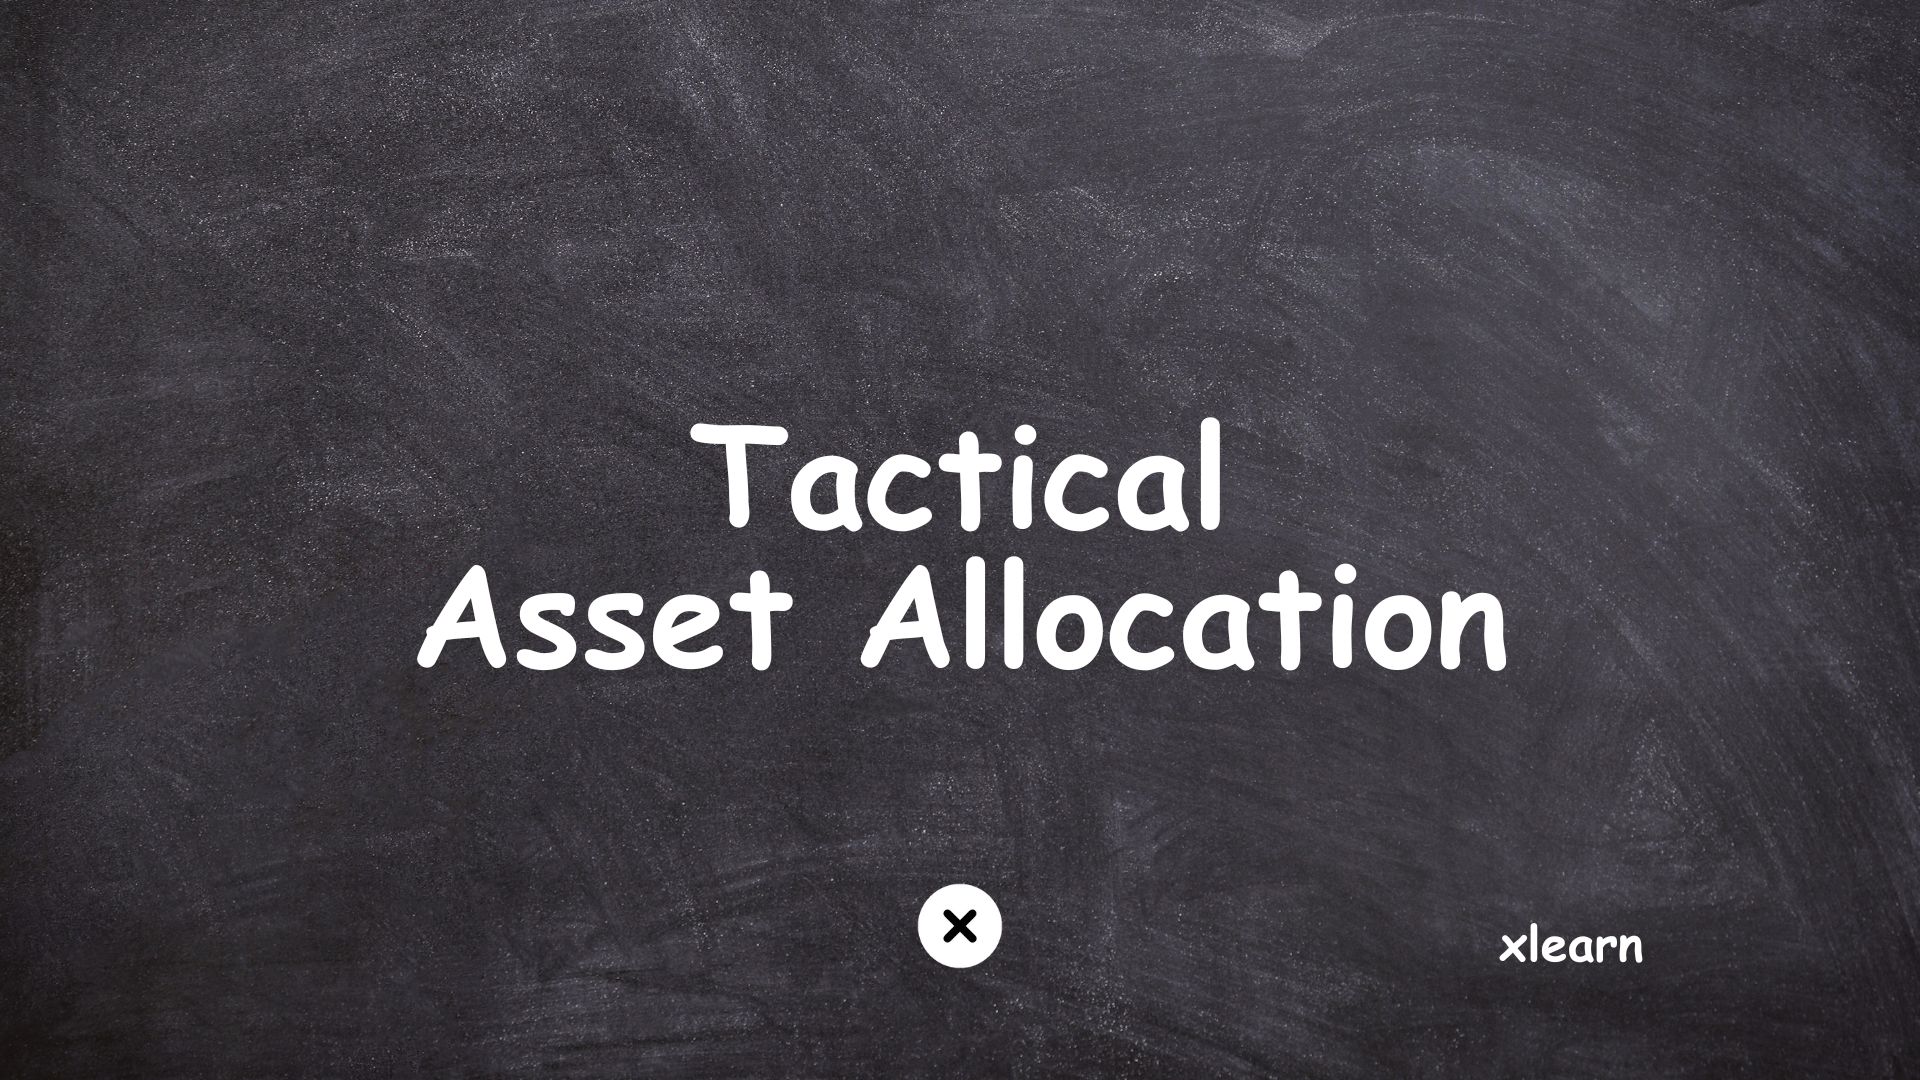 Tactical asset allocation